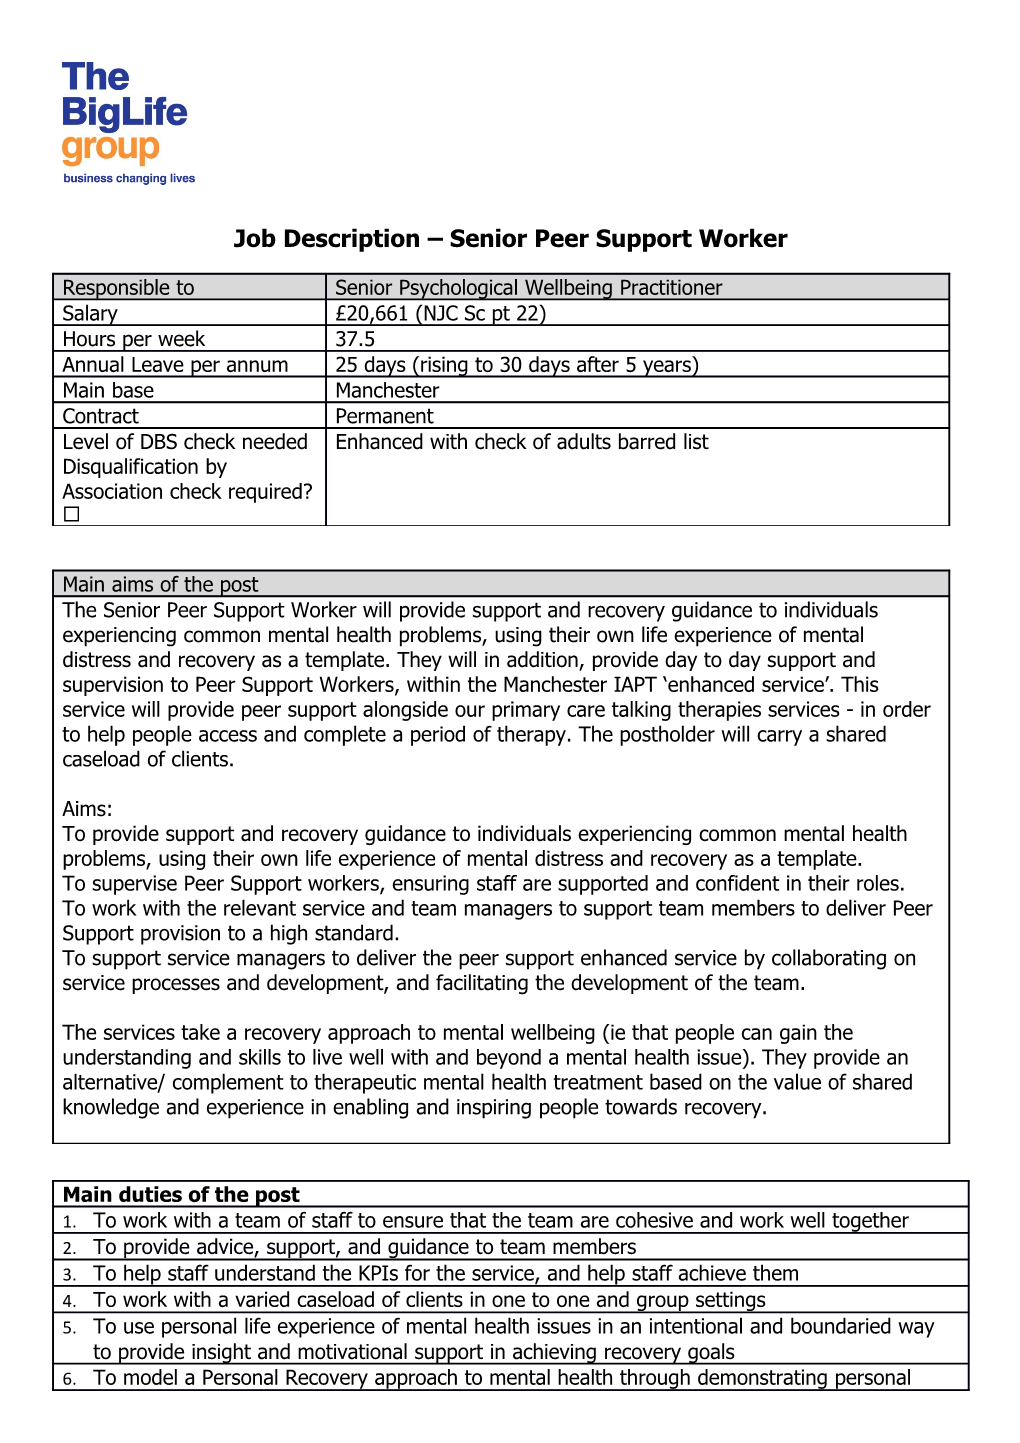 Job Description Senior Peer Support Worker